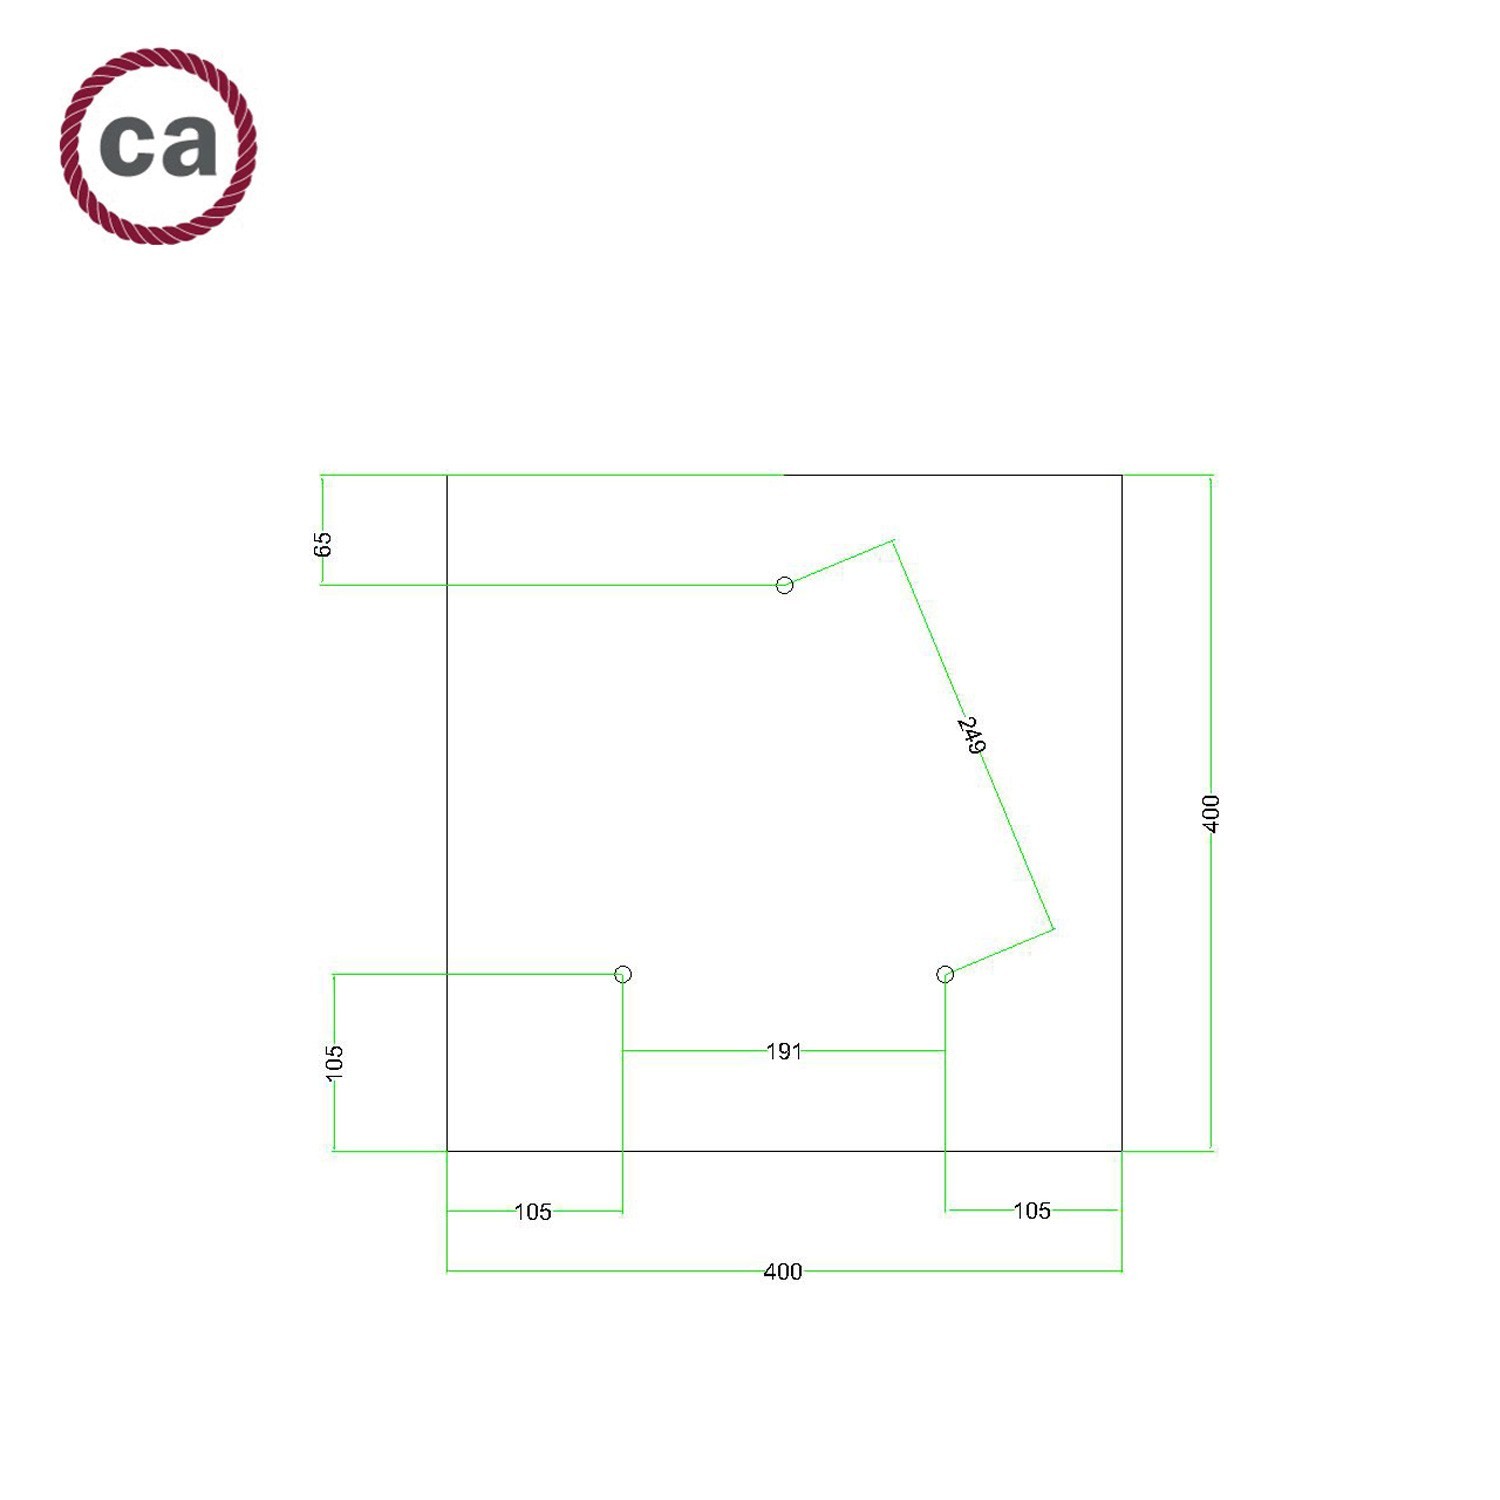 Komplett 400mm takkopp Rose-One System kvadrat - 3 hål (i triangelform) og 4 sidehål